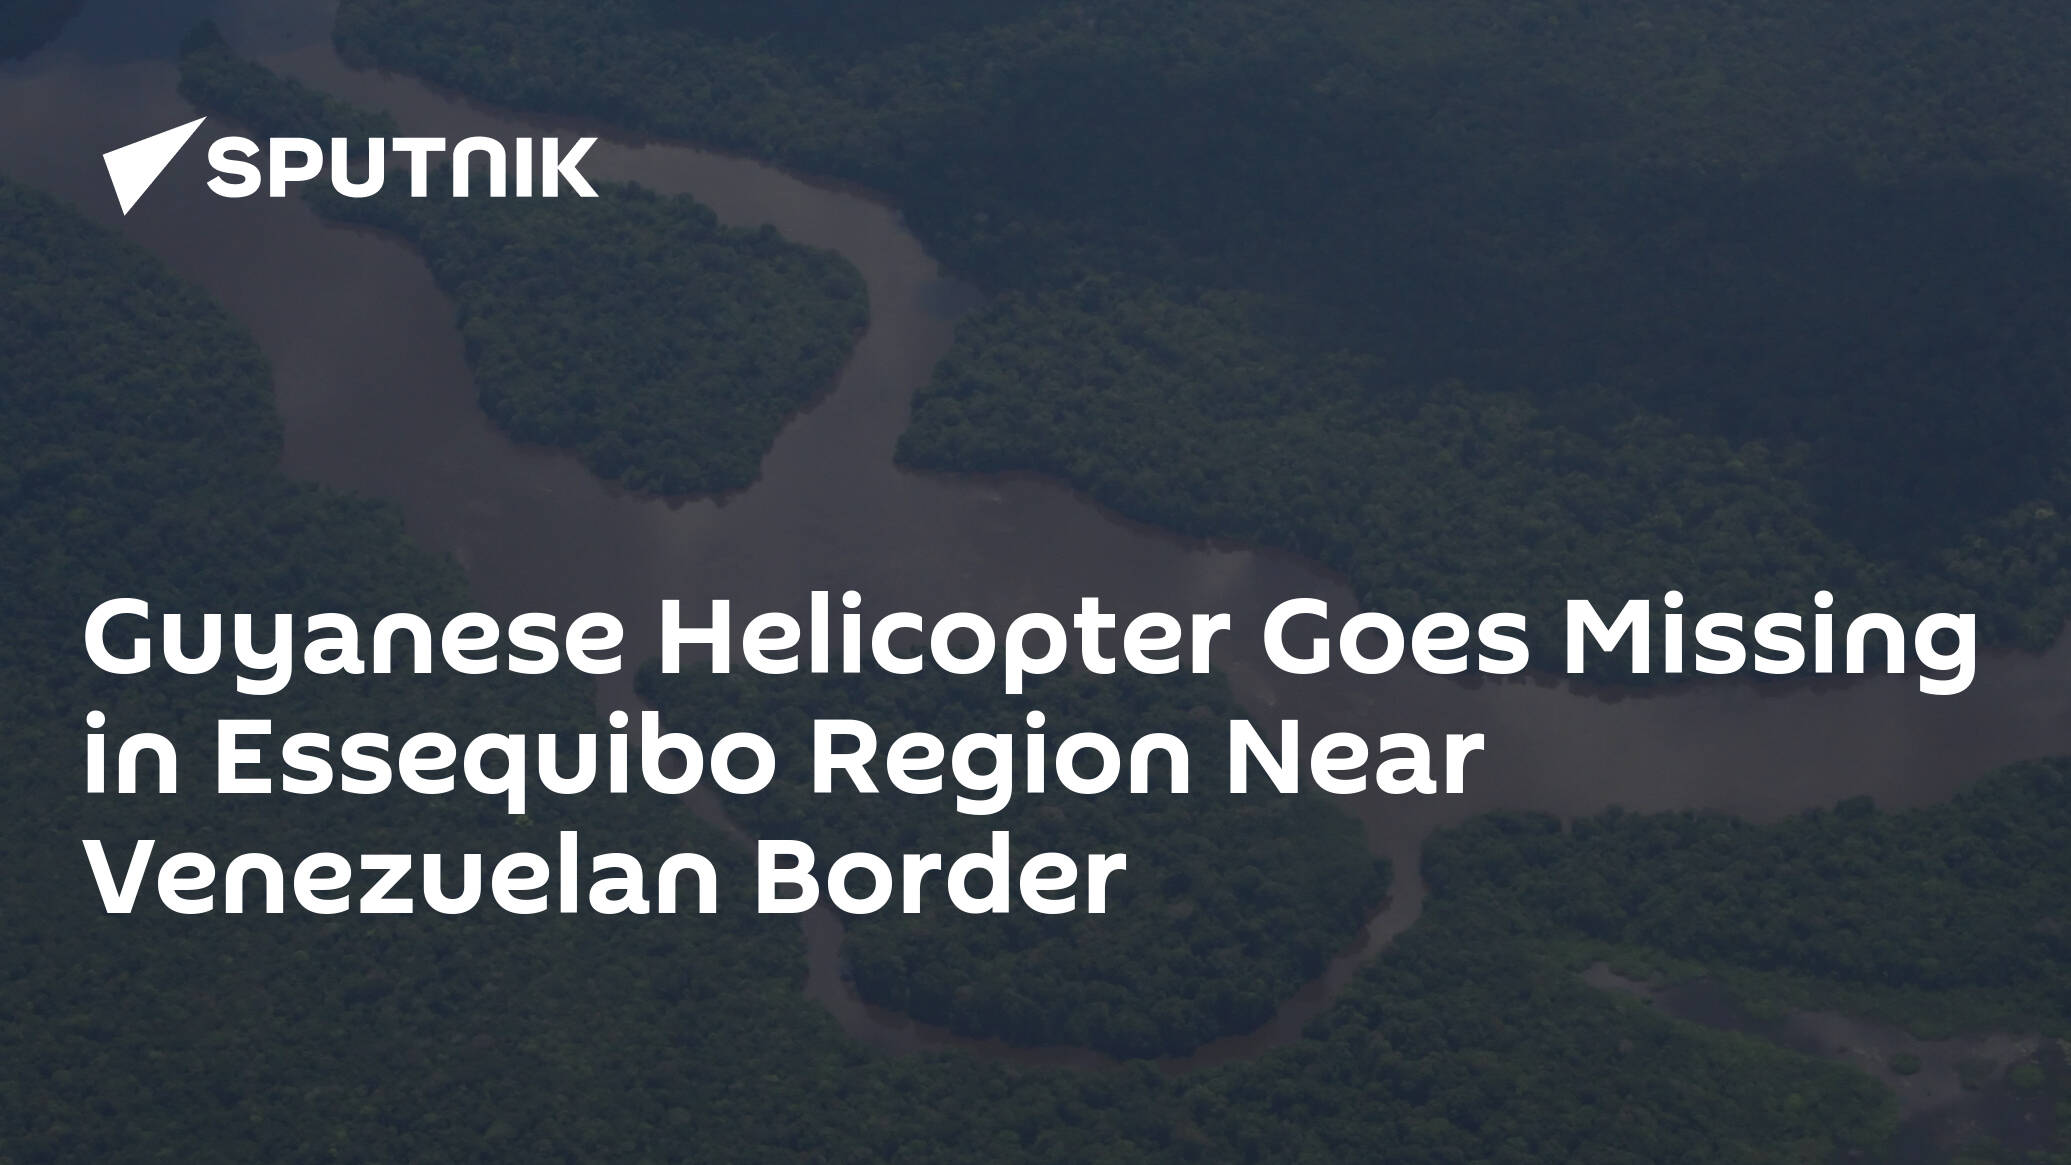 Guyanese Helicopter Goes Missing in Essequibo Region Near Venezuelan Border